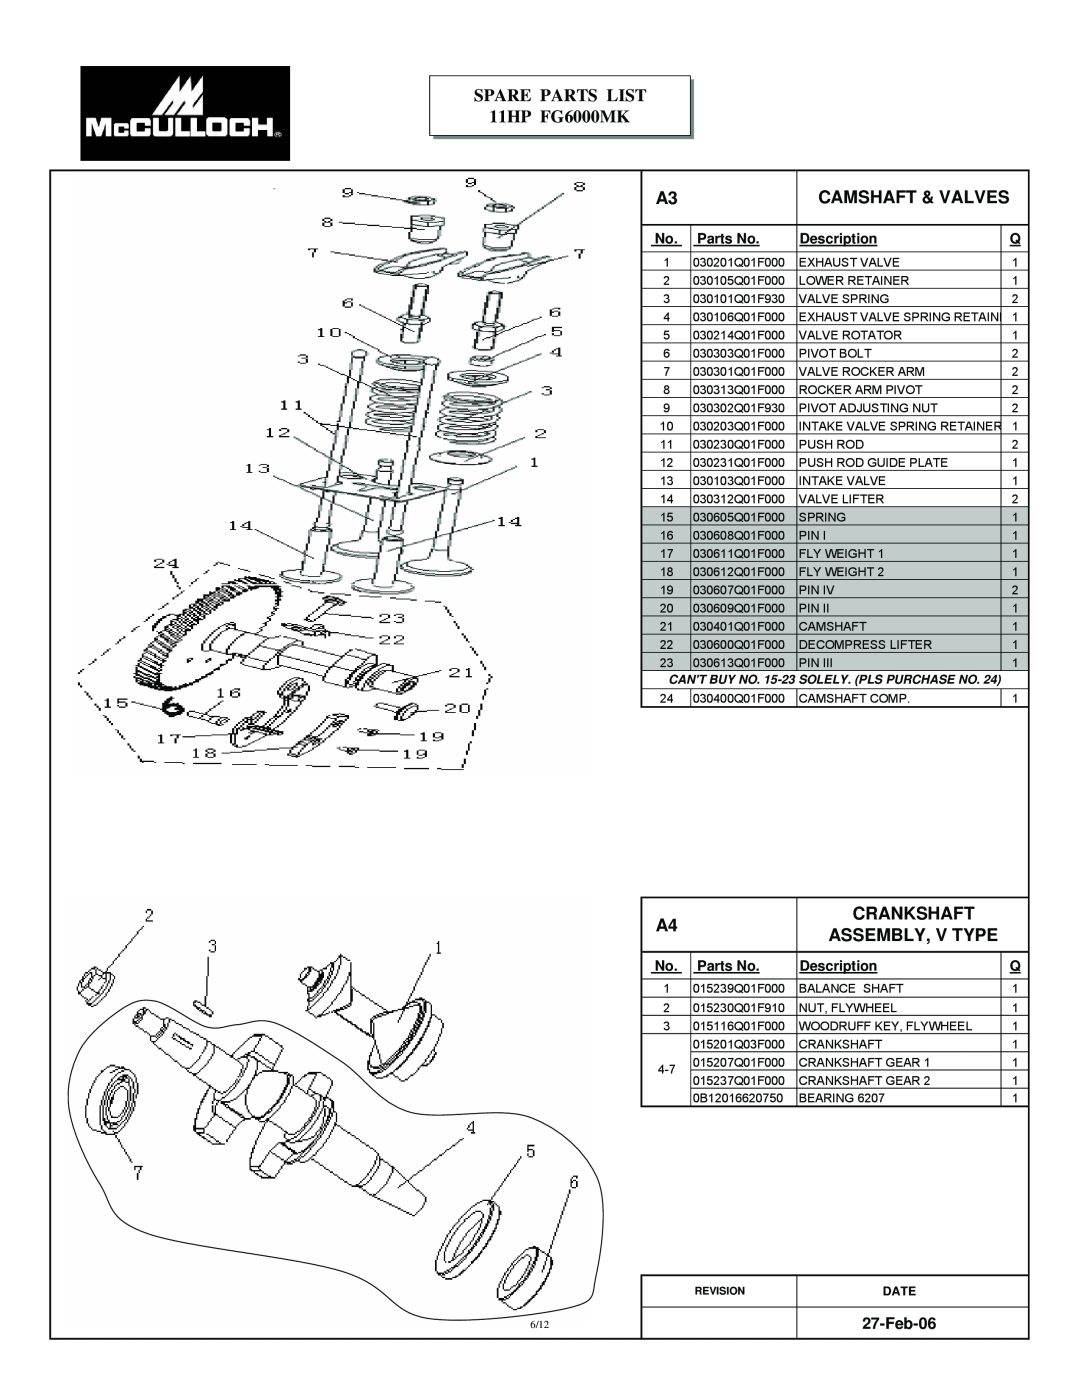 McCulloch manual Camshaft & Valves, Crankshaft, Assembly, V Type, SPARE PARTS LIST 11HP FG6000MK, Feb-06, Parts No, Date 